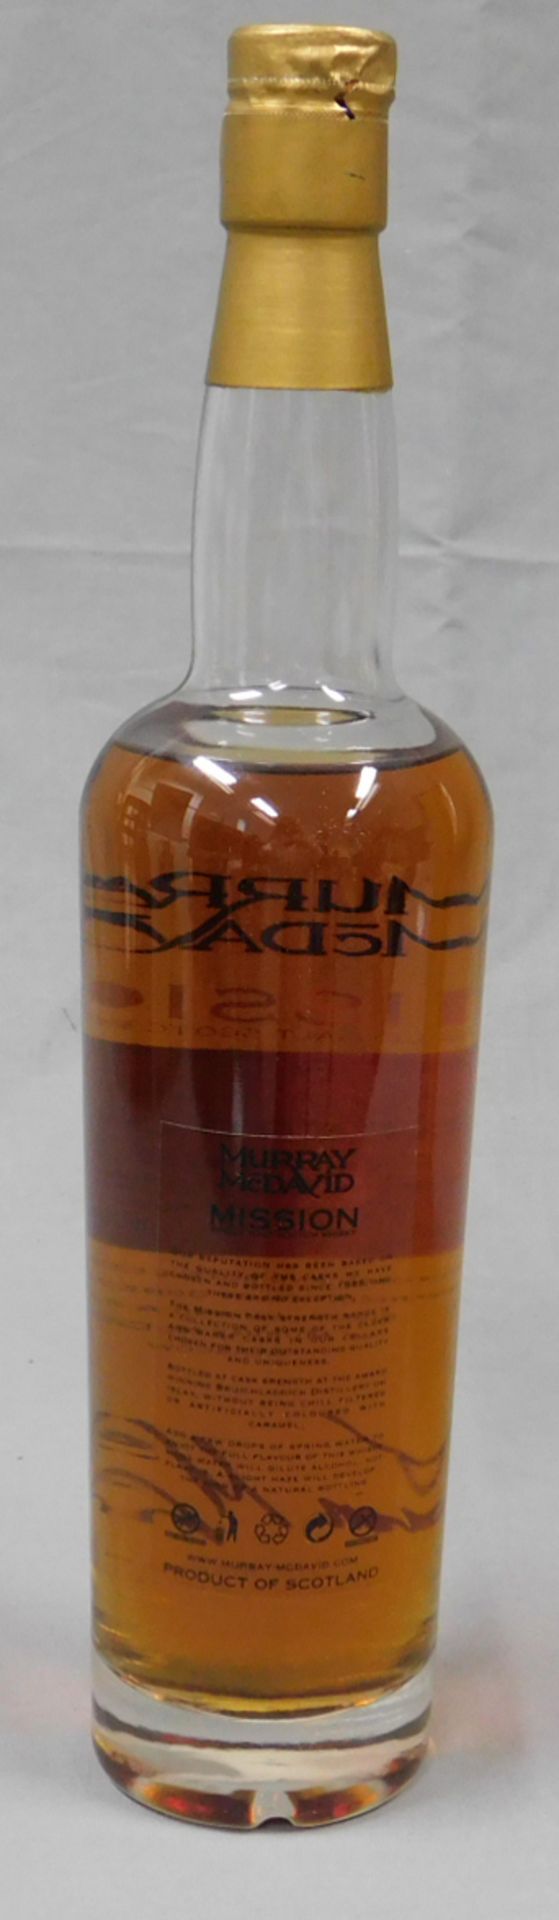 Murray McDavid Mission Single Malt Scotch Whisky. - Image 3 of 6